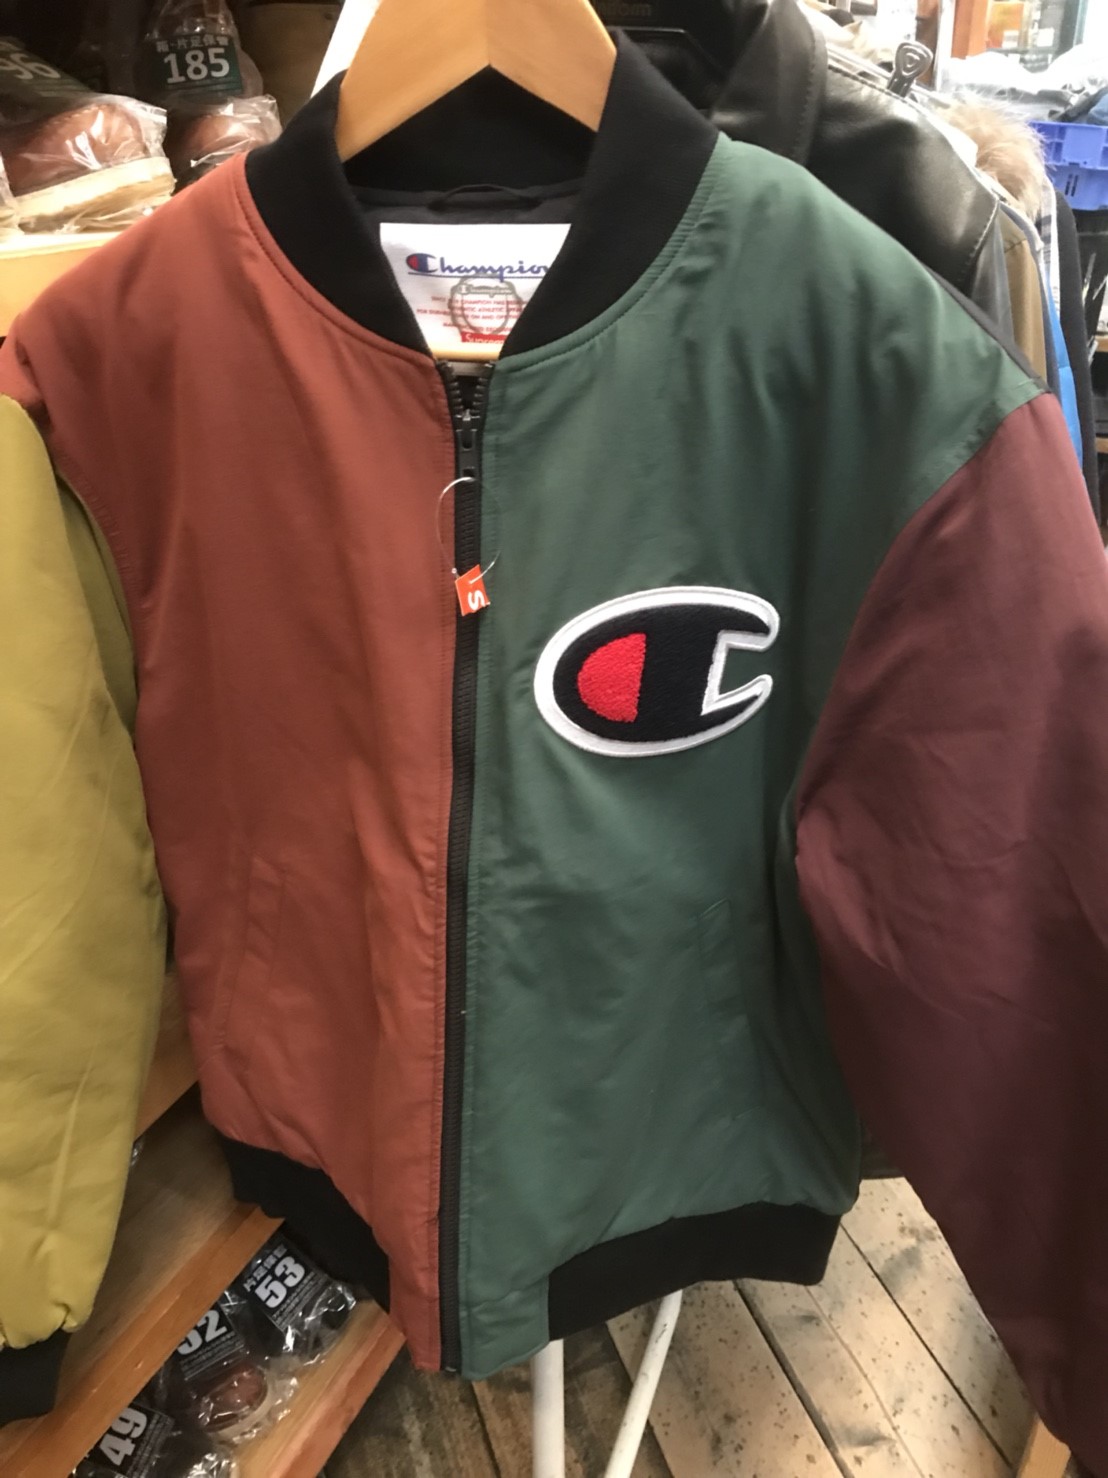 【M】Supreme Champion Color Blocked Jacket